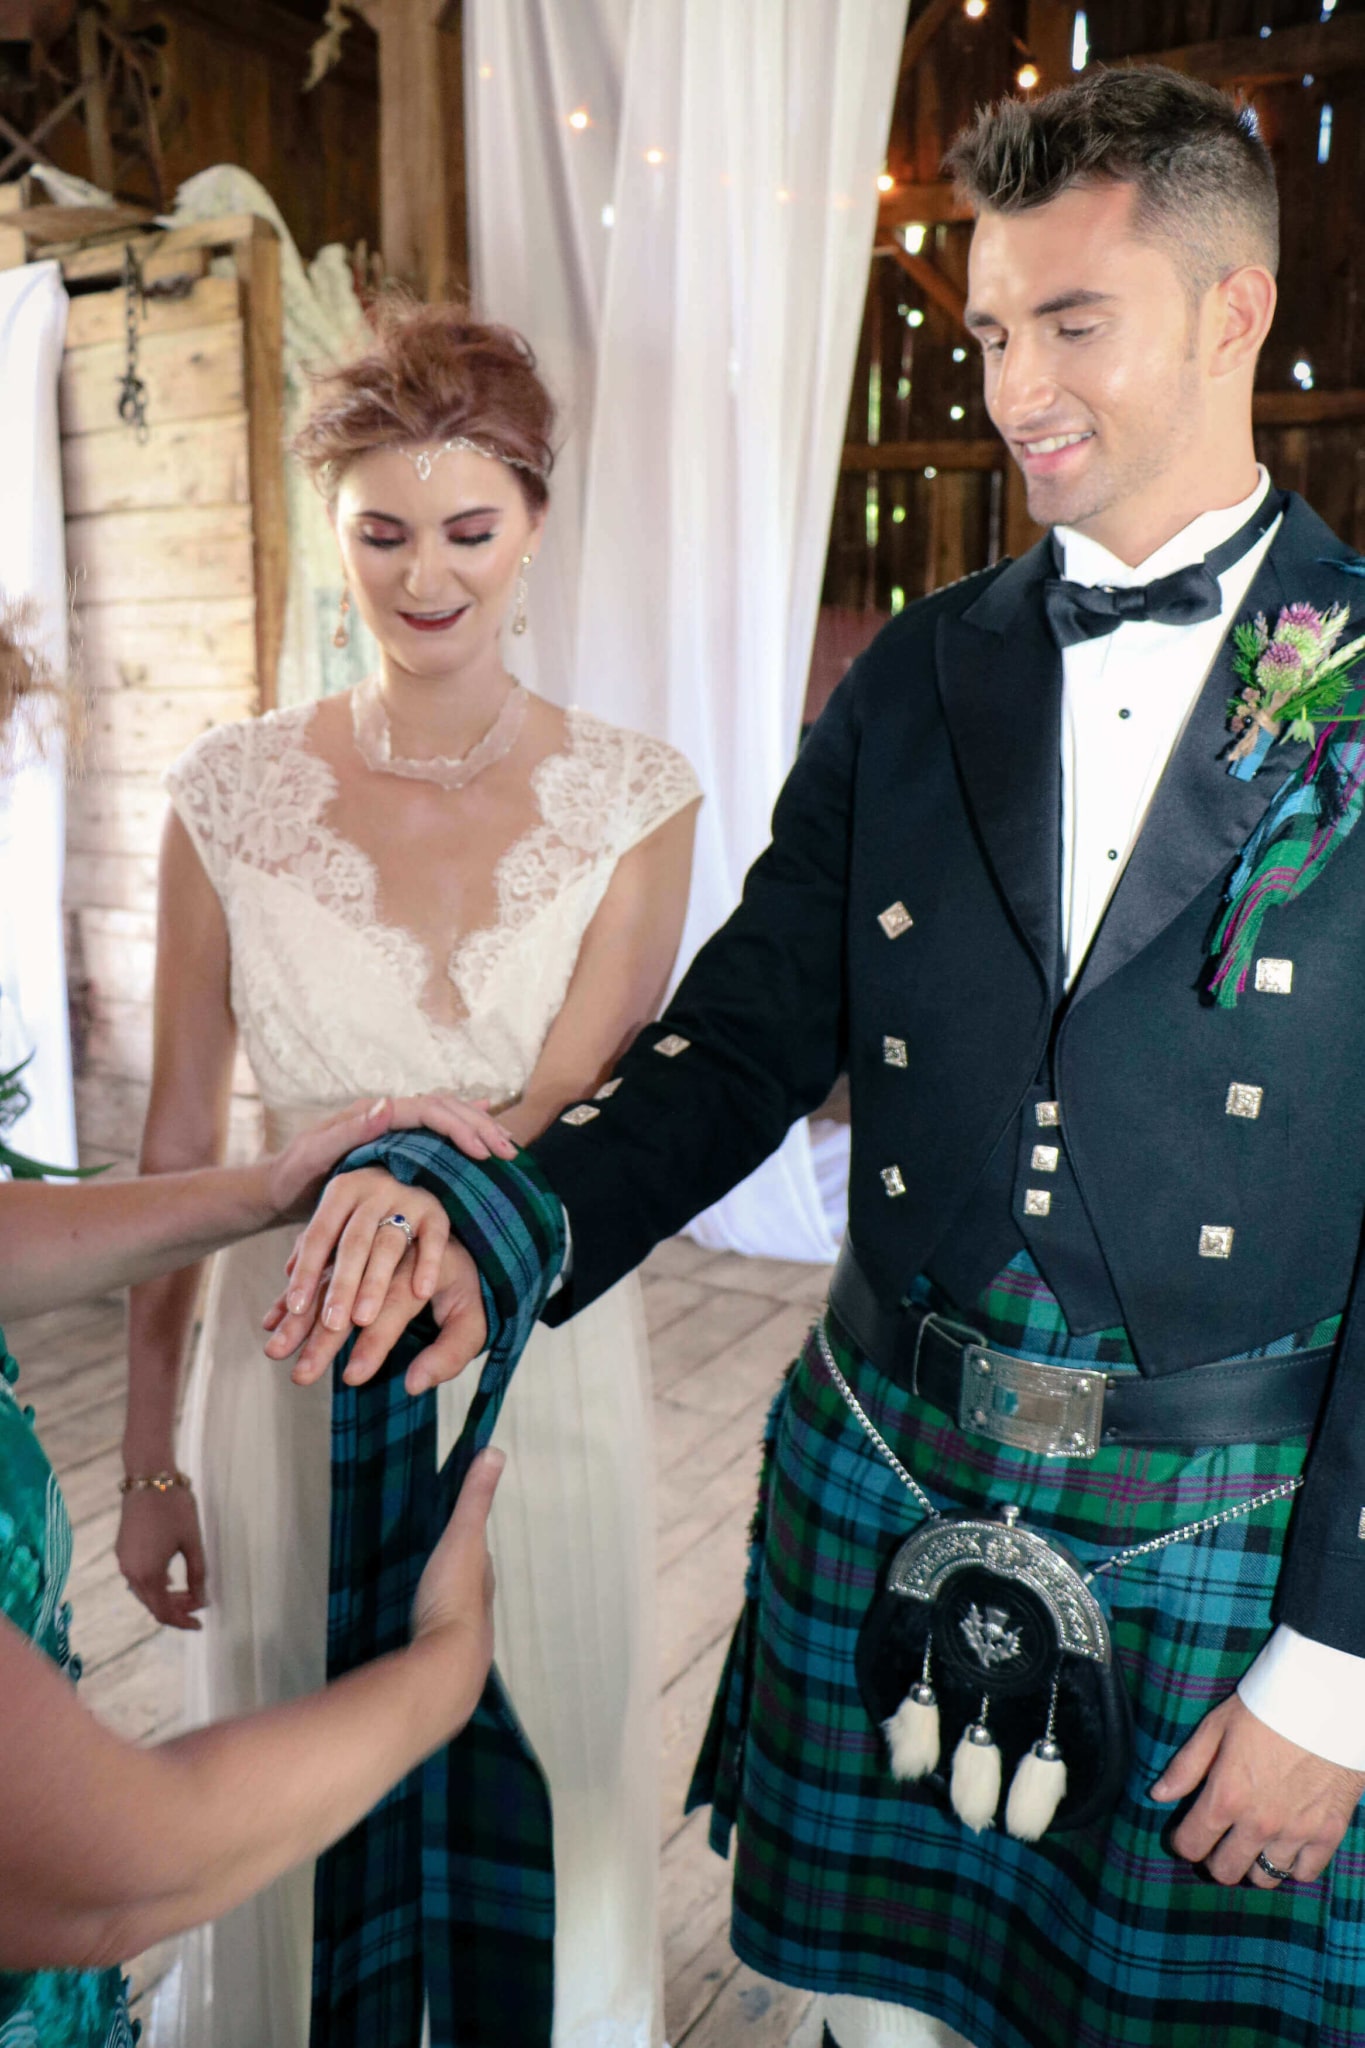 Rental Handfasting ribbon in celtic wedding ceremony